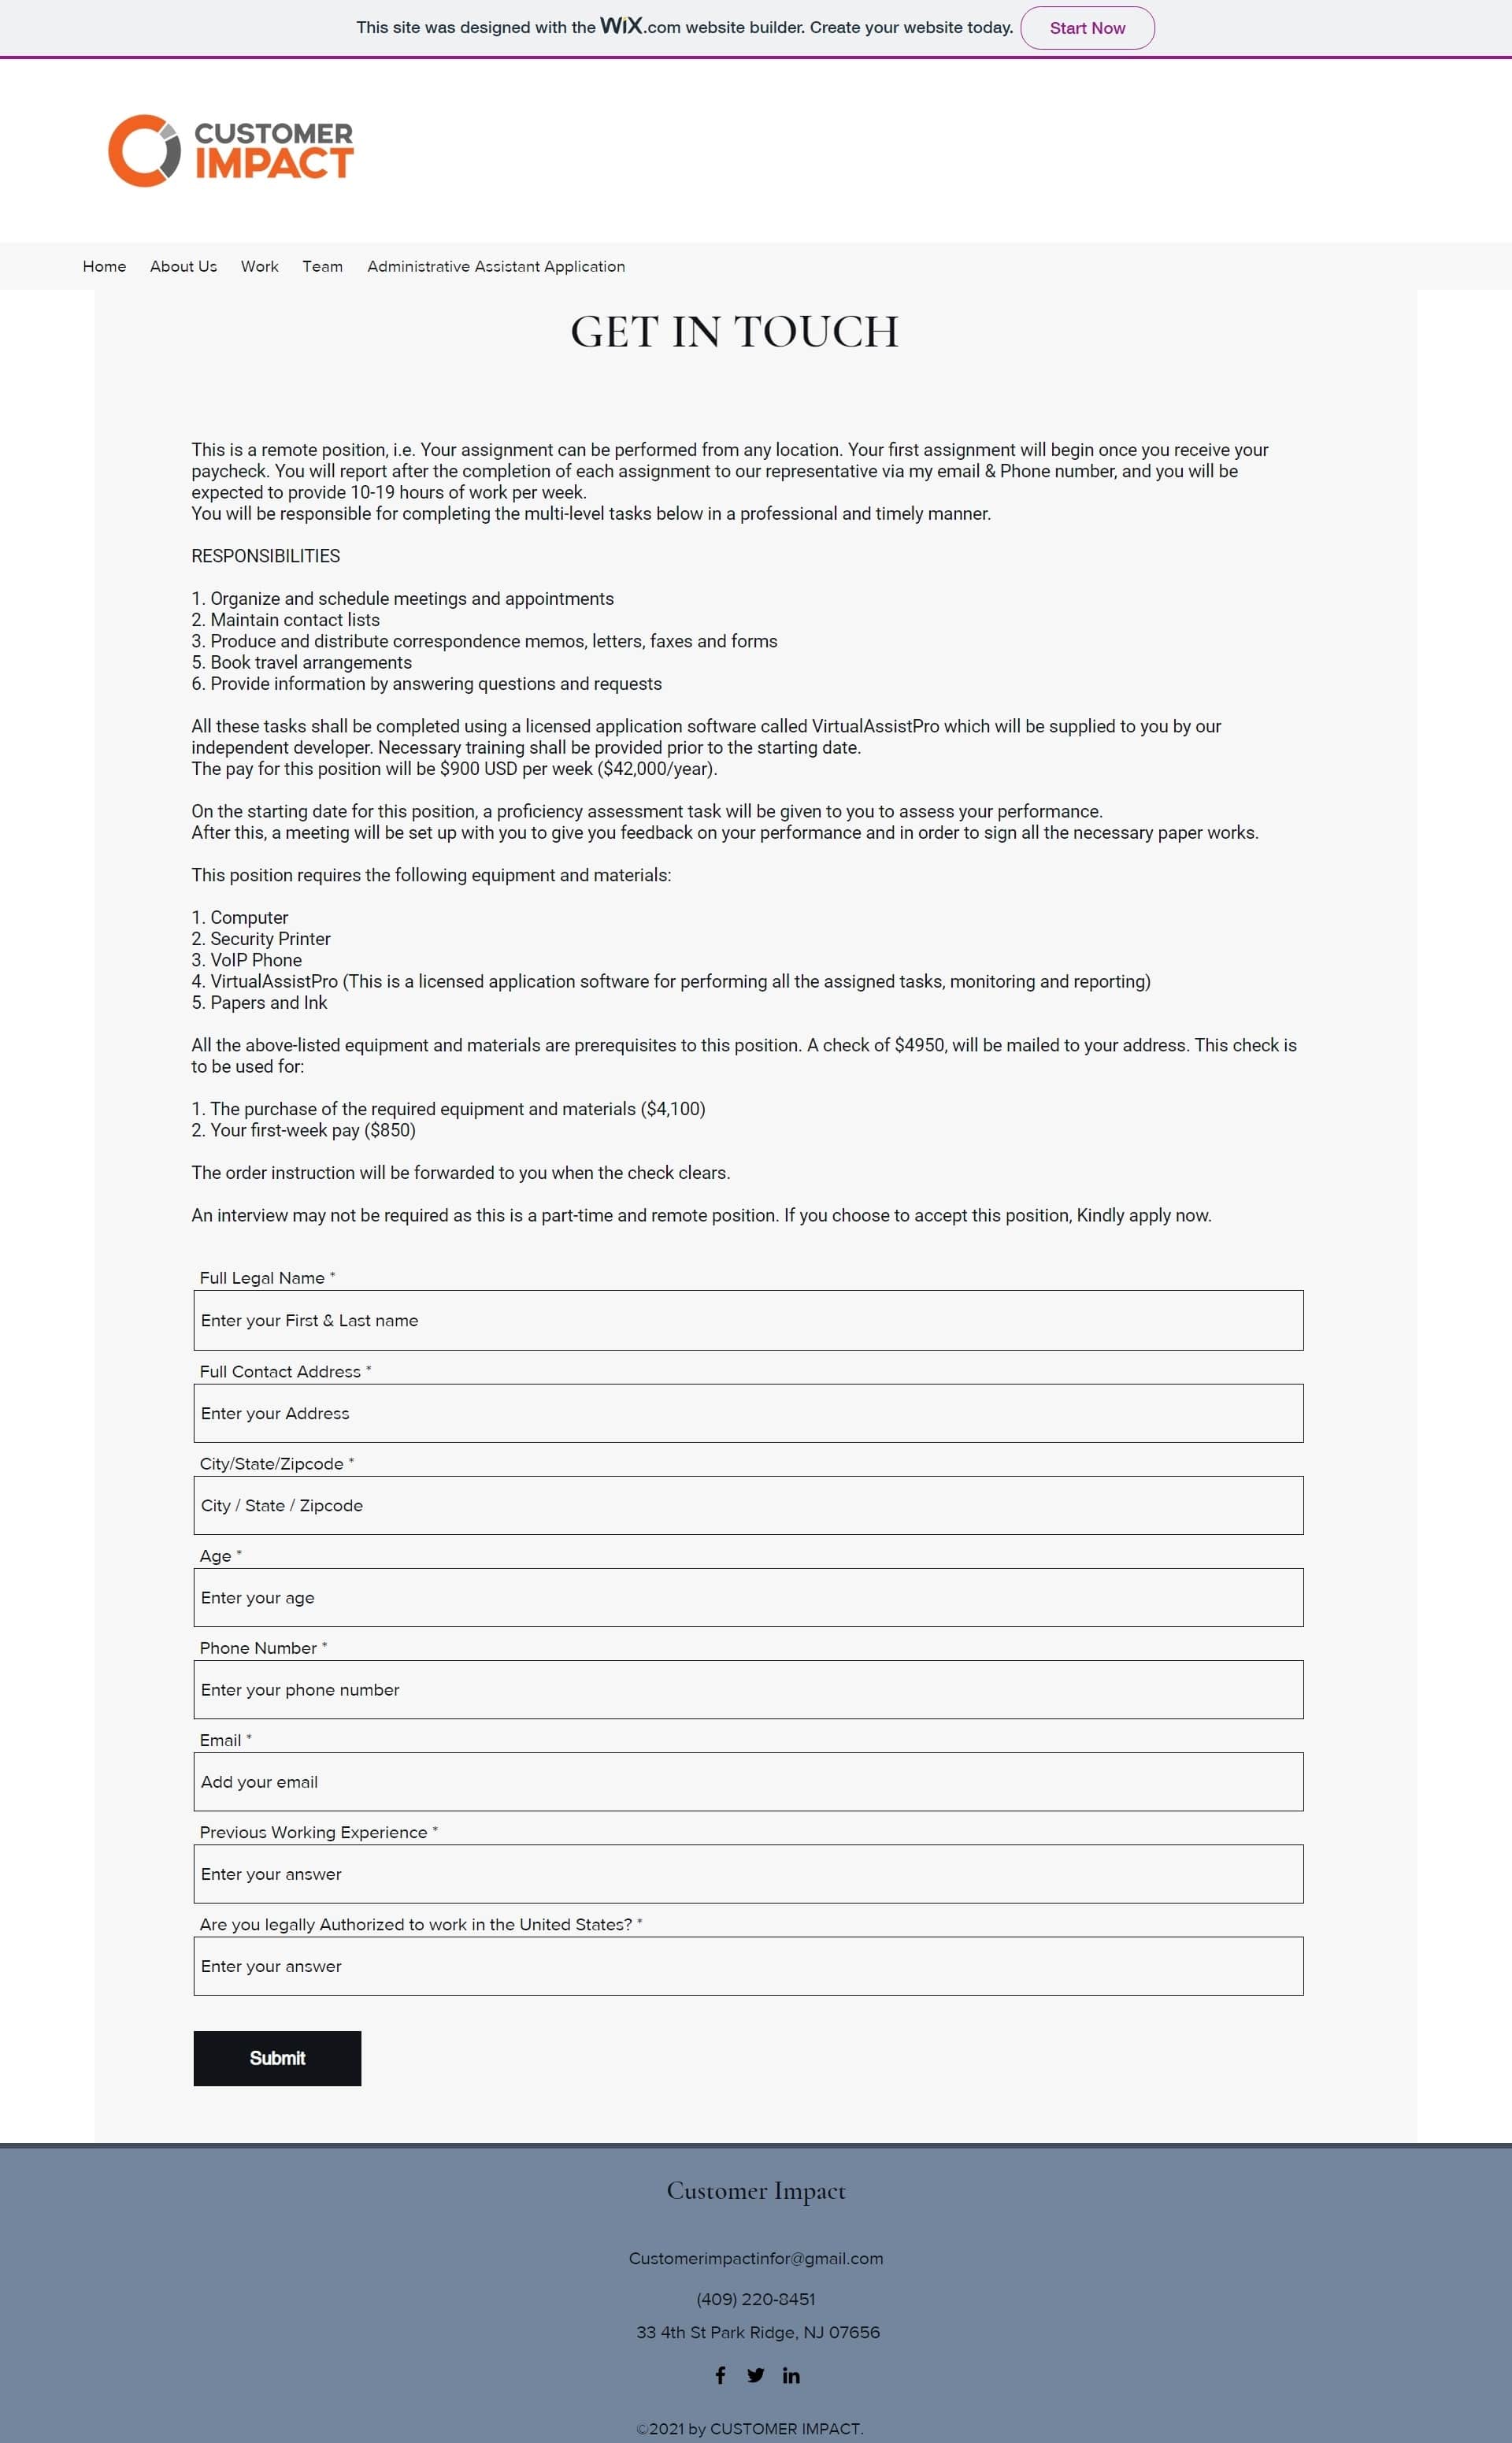 Scam Warning - Imposter Website Application Form